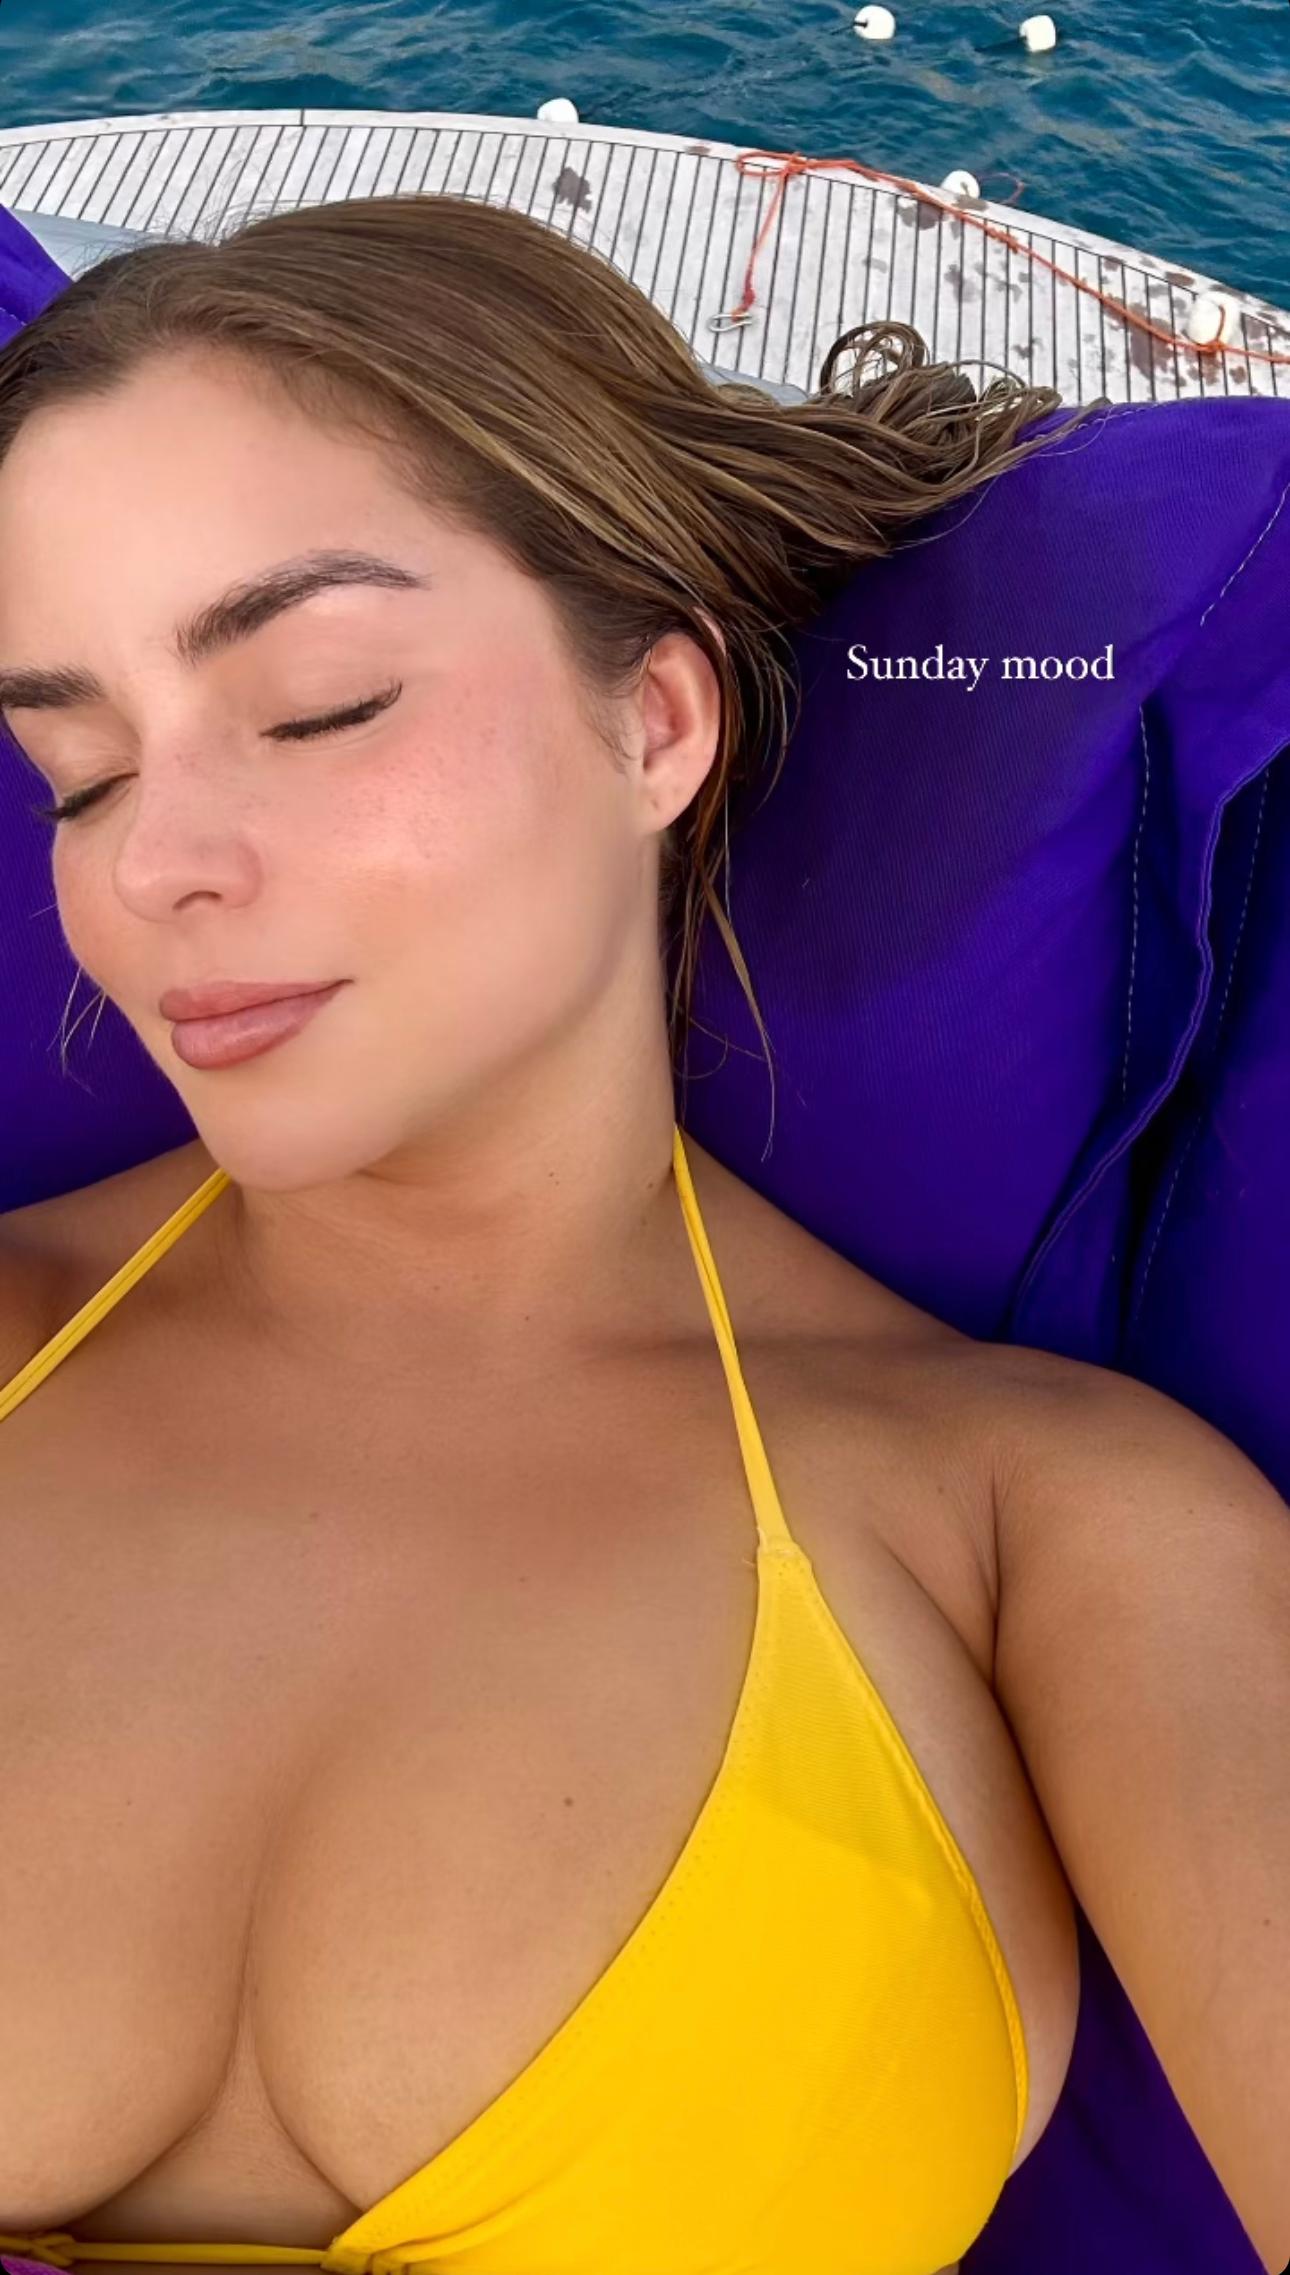 Demi Rose takes a selfie while wearing a yellow bikini top.